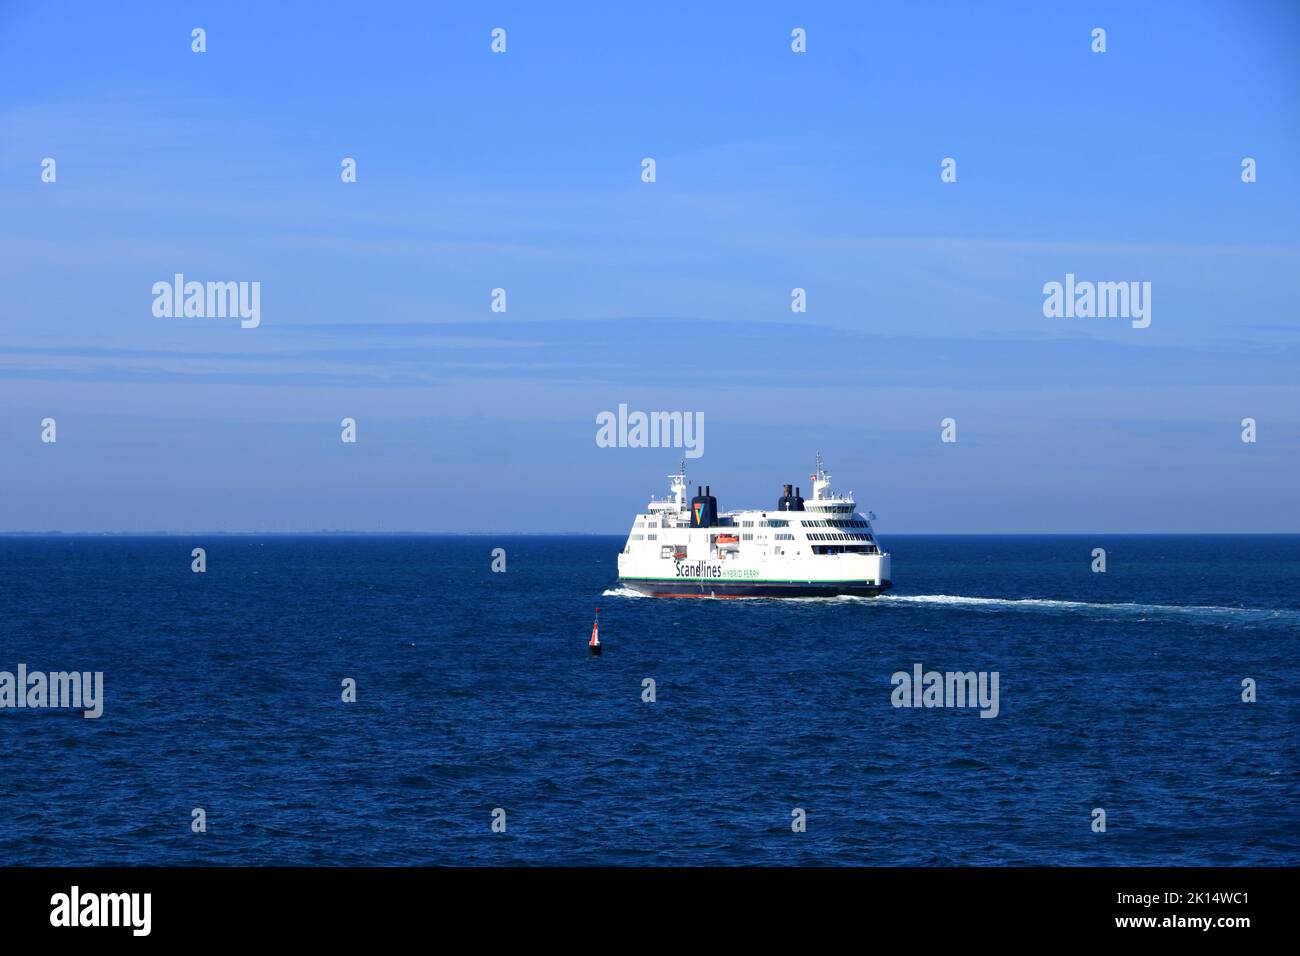 June 2 2022 - Puttgarden, Germany: the Scandlines passenger ferry between the ports of Rødbyhavn and Puttgarden Stock Photo